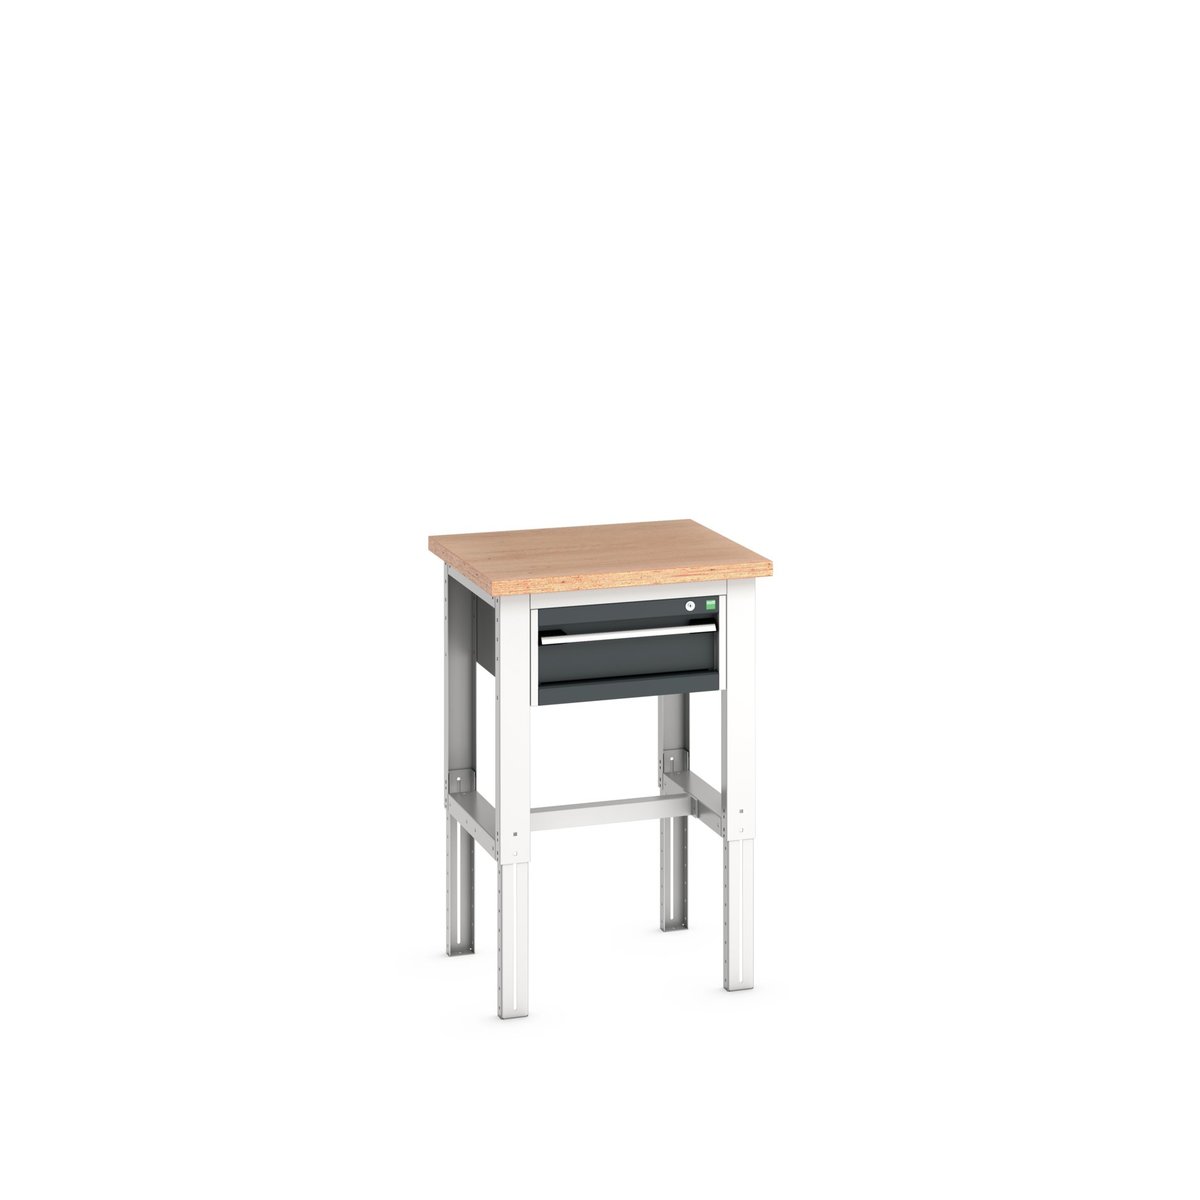 41003530. - cubio framework bench (mpx)